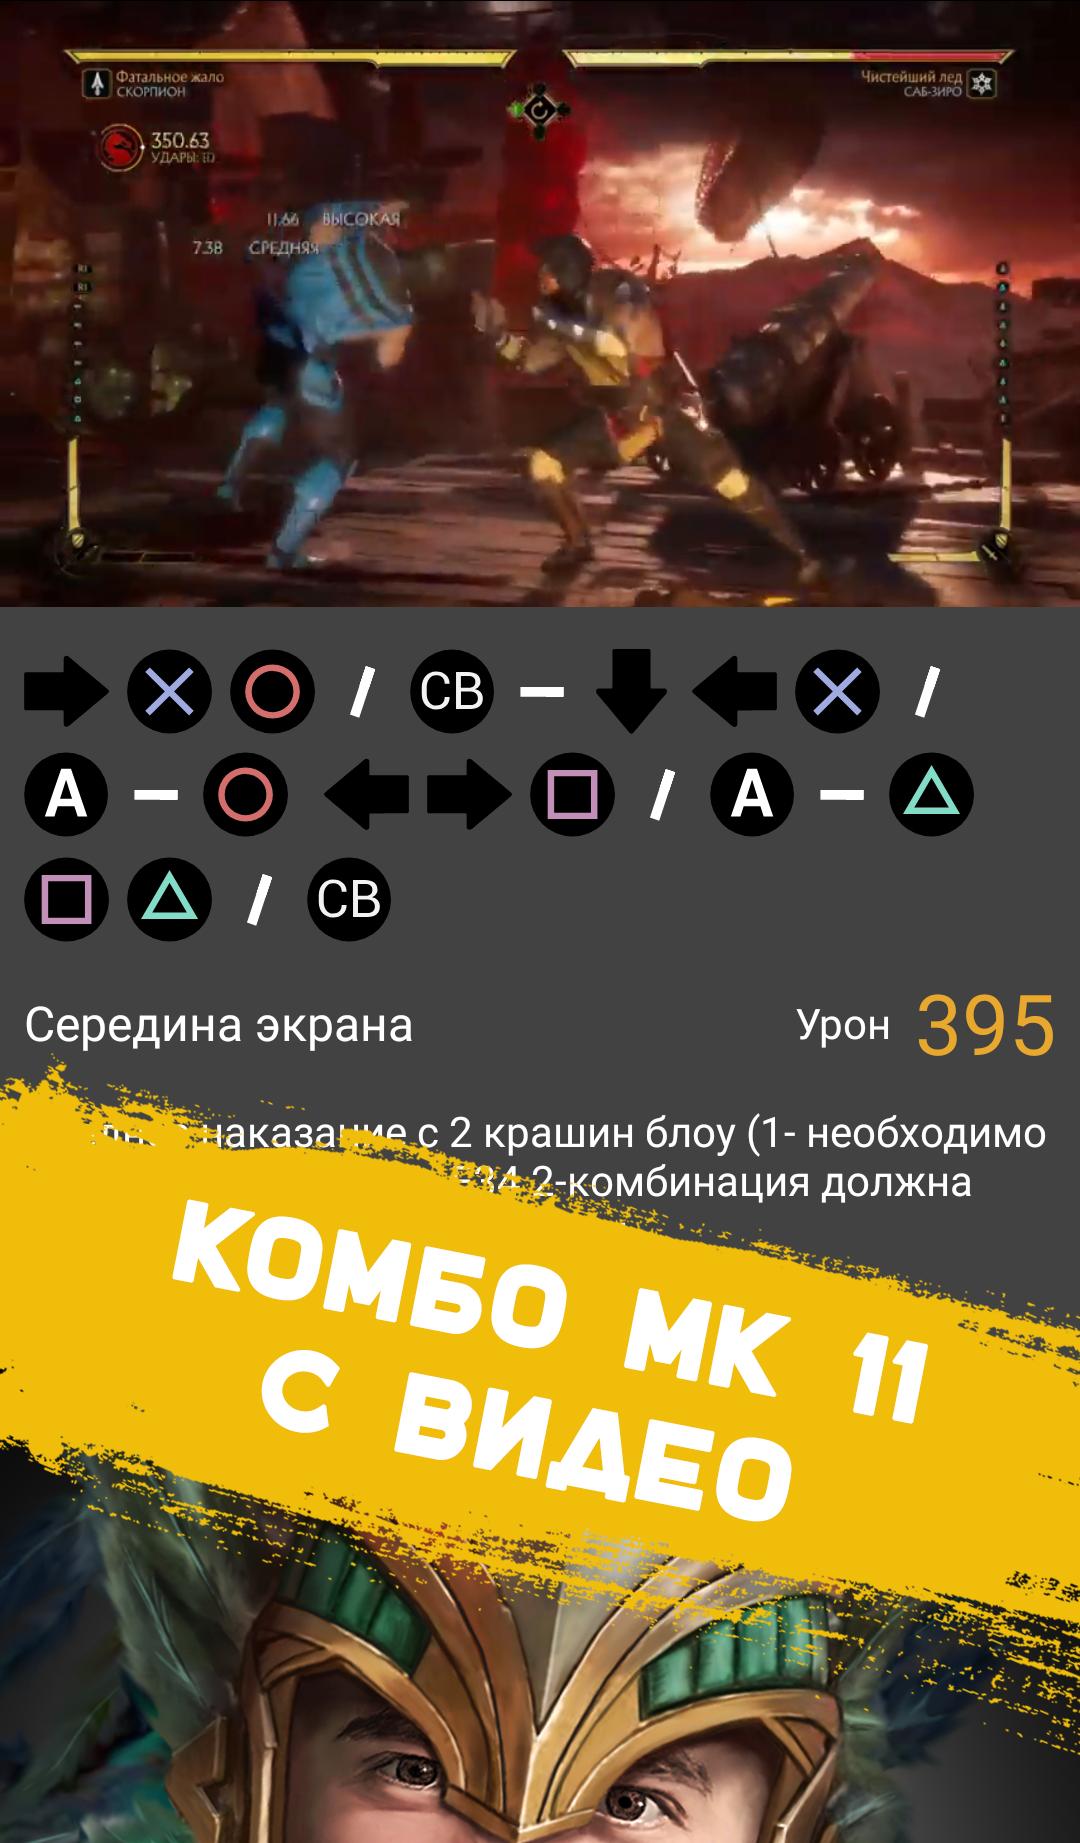 Приемы в мортал комбат 11. Mk11 Скорпион комбо Xbox. Комбо удары в мортал комбат 11 на ps4. Mortal Kombat 11 Scorpion Guide PLAYSTATION. Mortal Kombat ps4 комбинации.